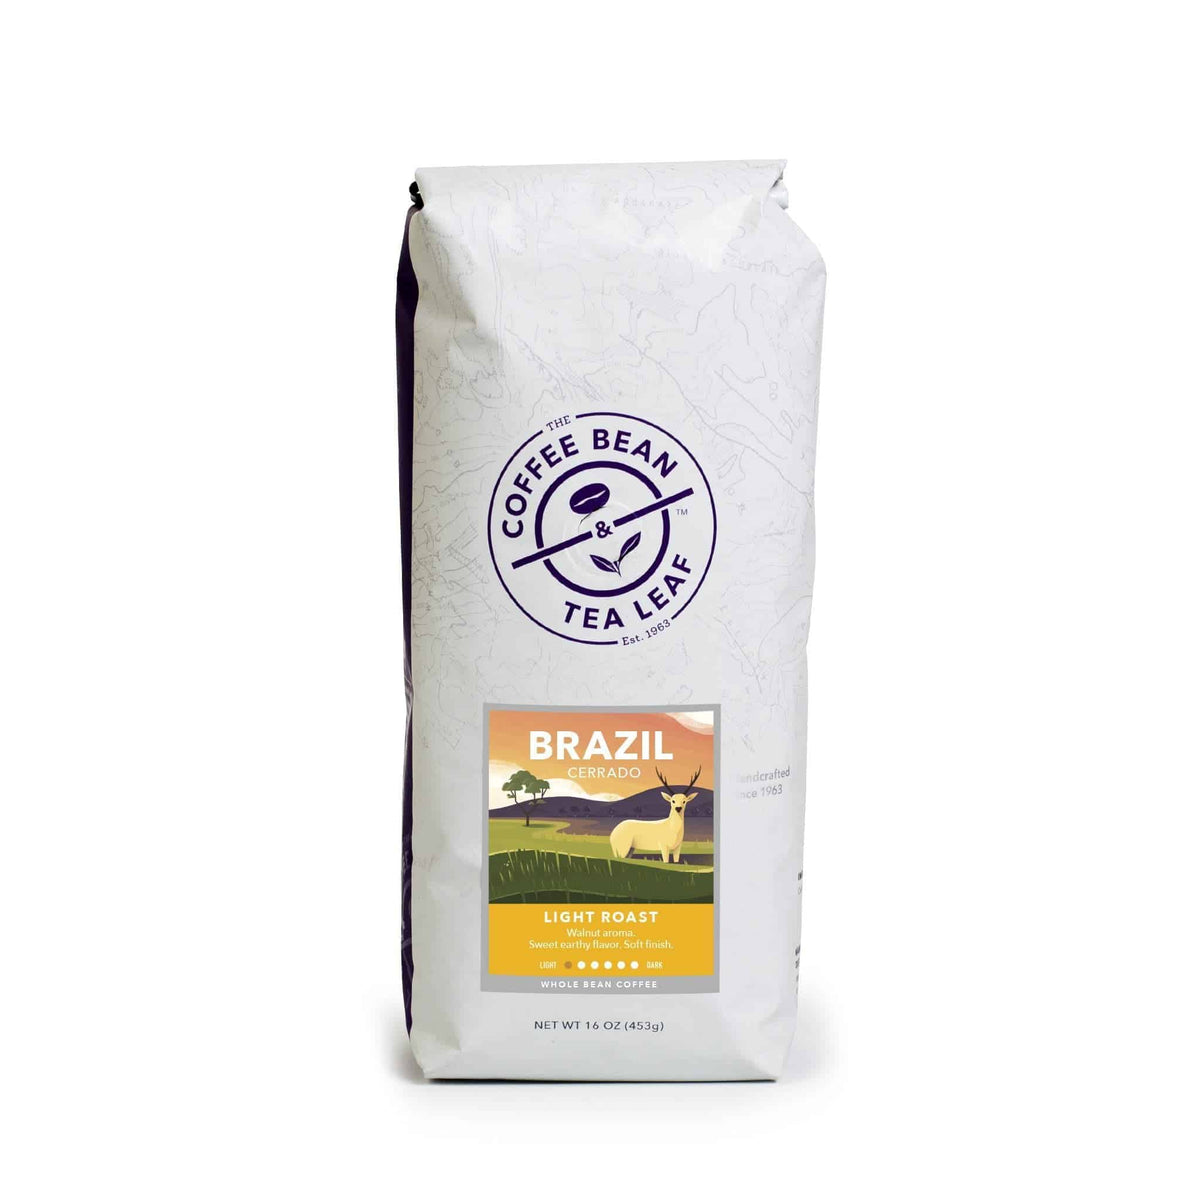 Brazil Cerrado 17/18 - 12oz WHOLE BEAN - Dragonfly Coffee Roasters